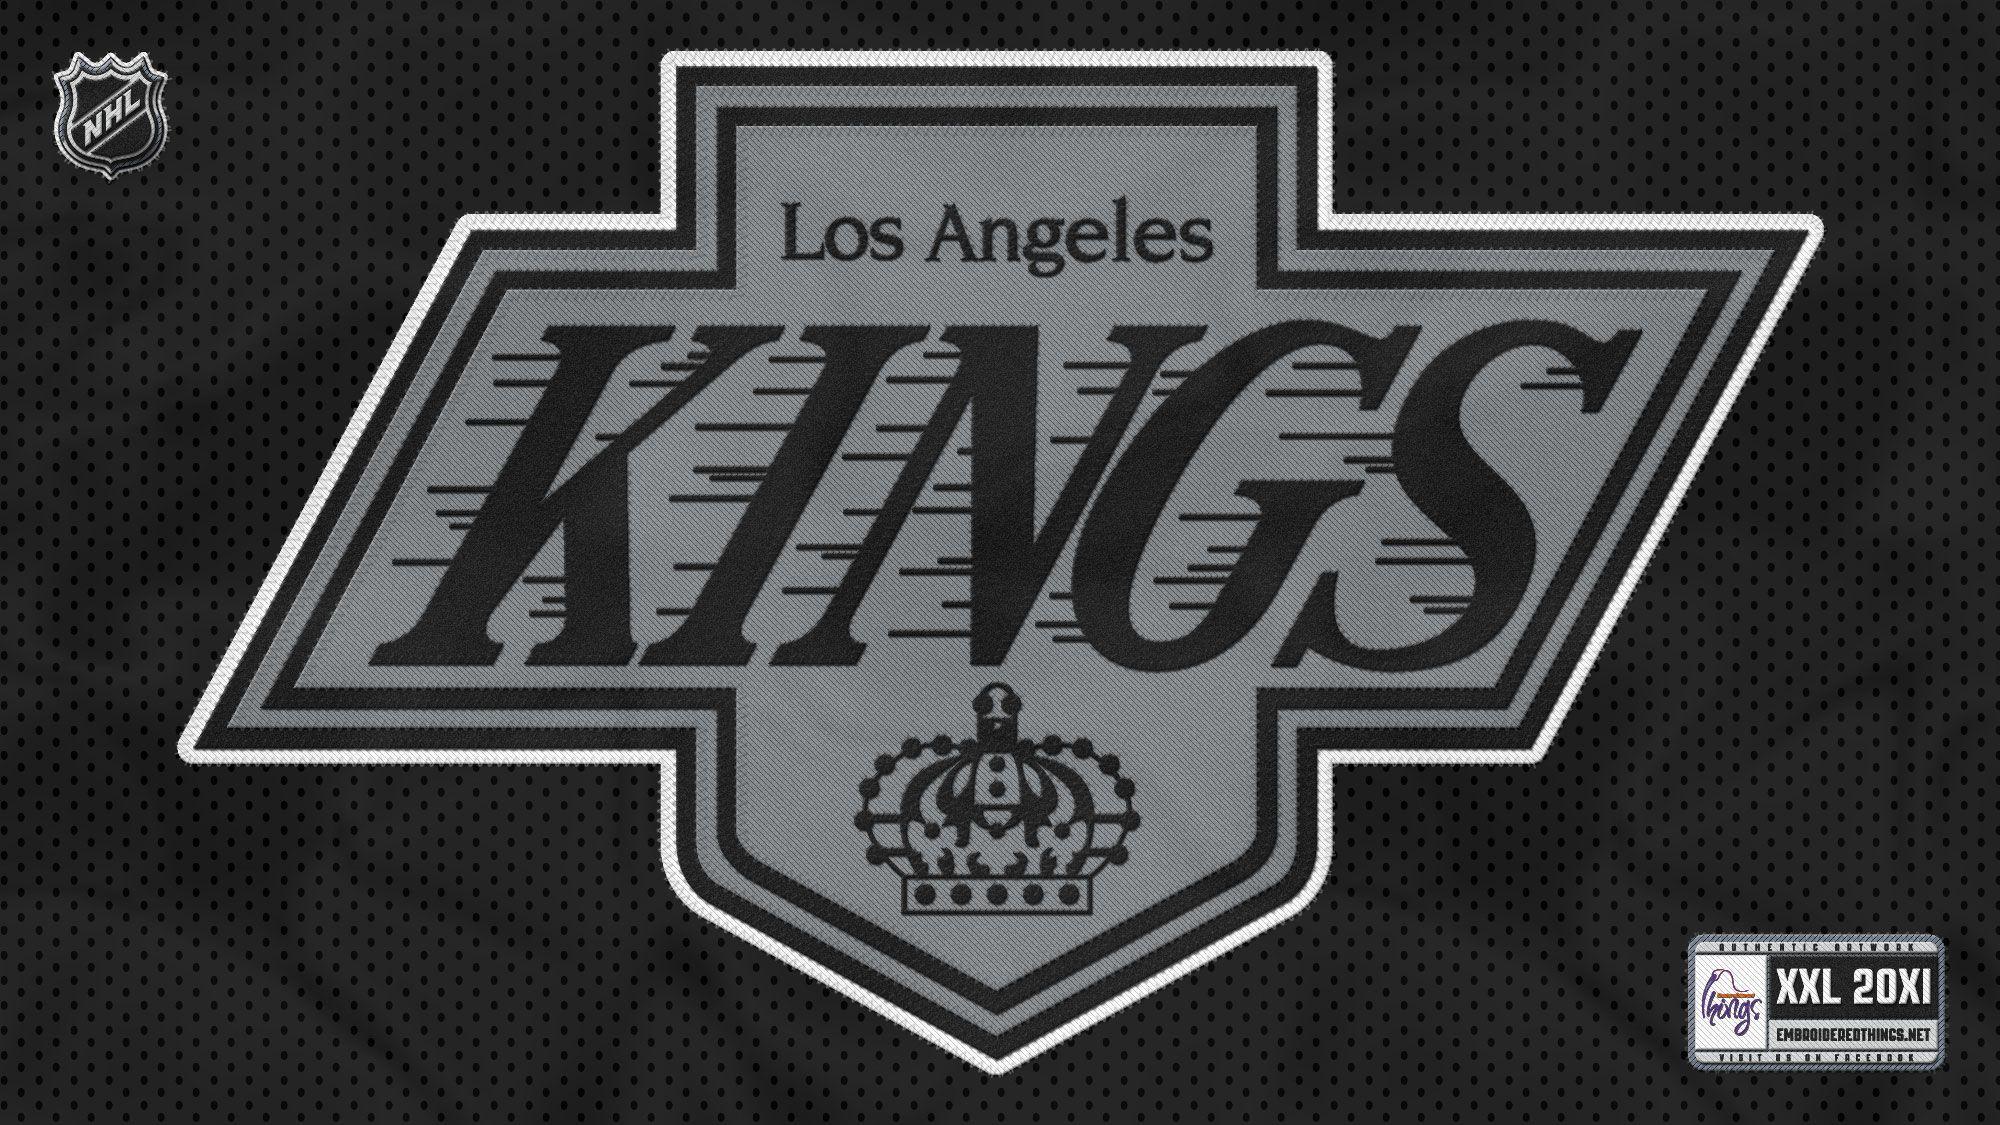 LA Kings Wallpaper 2000x1125 (446.04 KB)